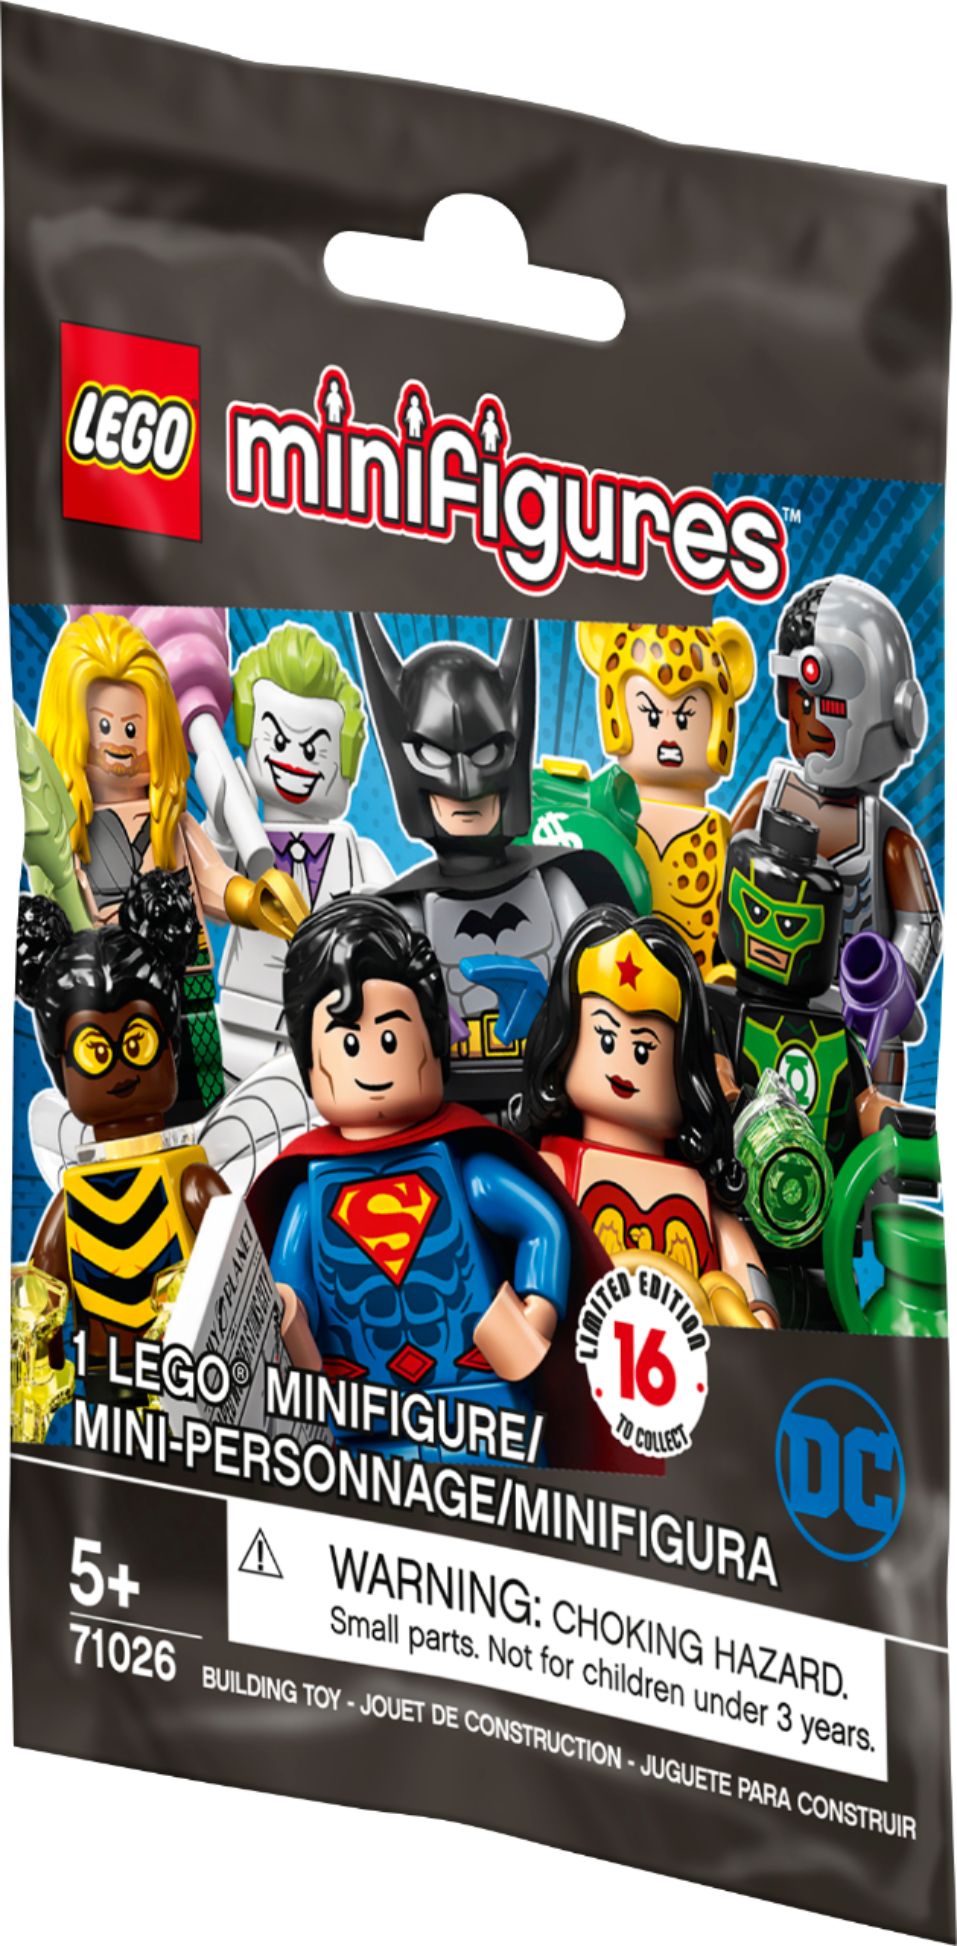 BNIB Wholesale Full Box Lego Minifigures Mini Figures DC Superheroes 71026 